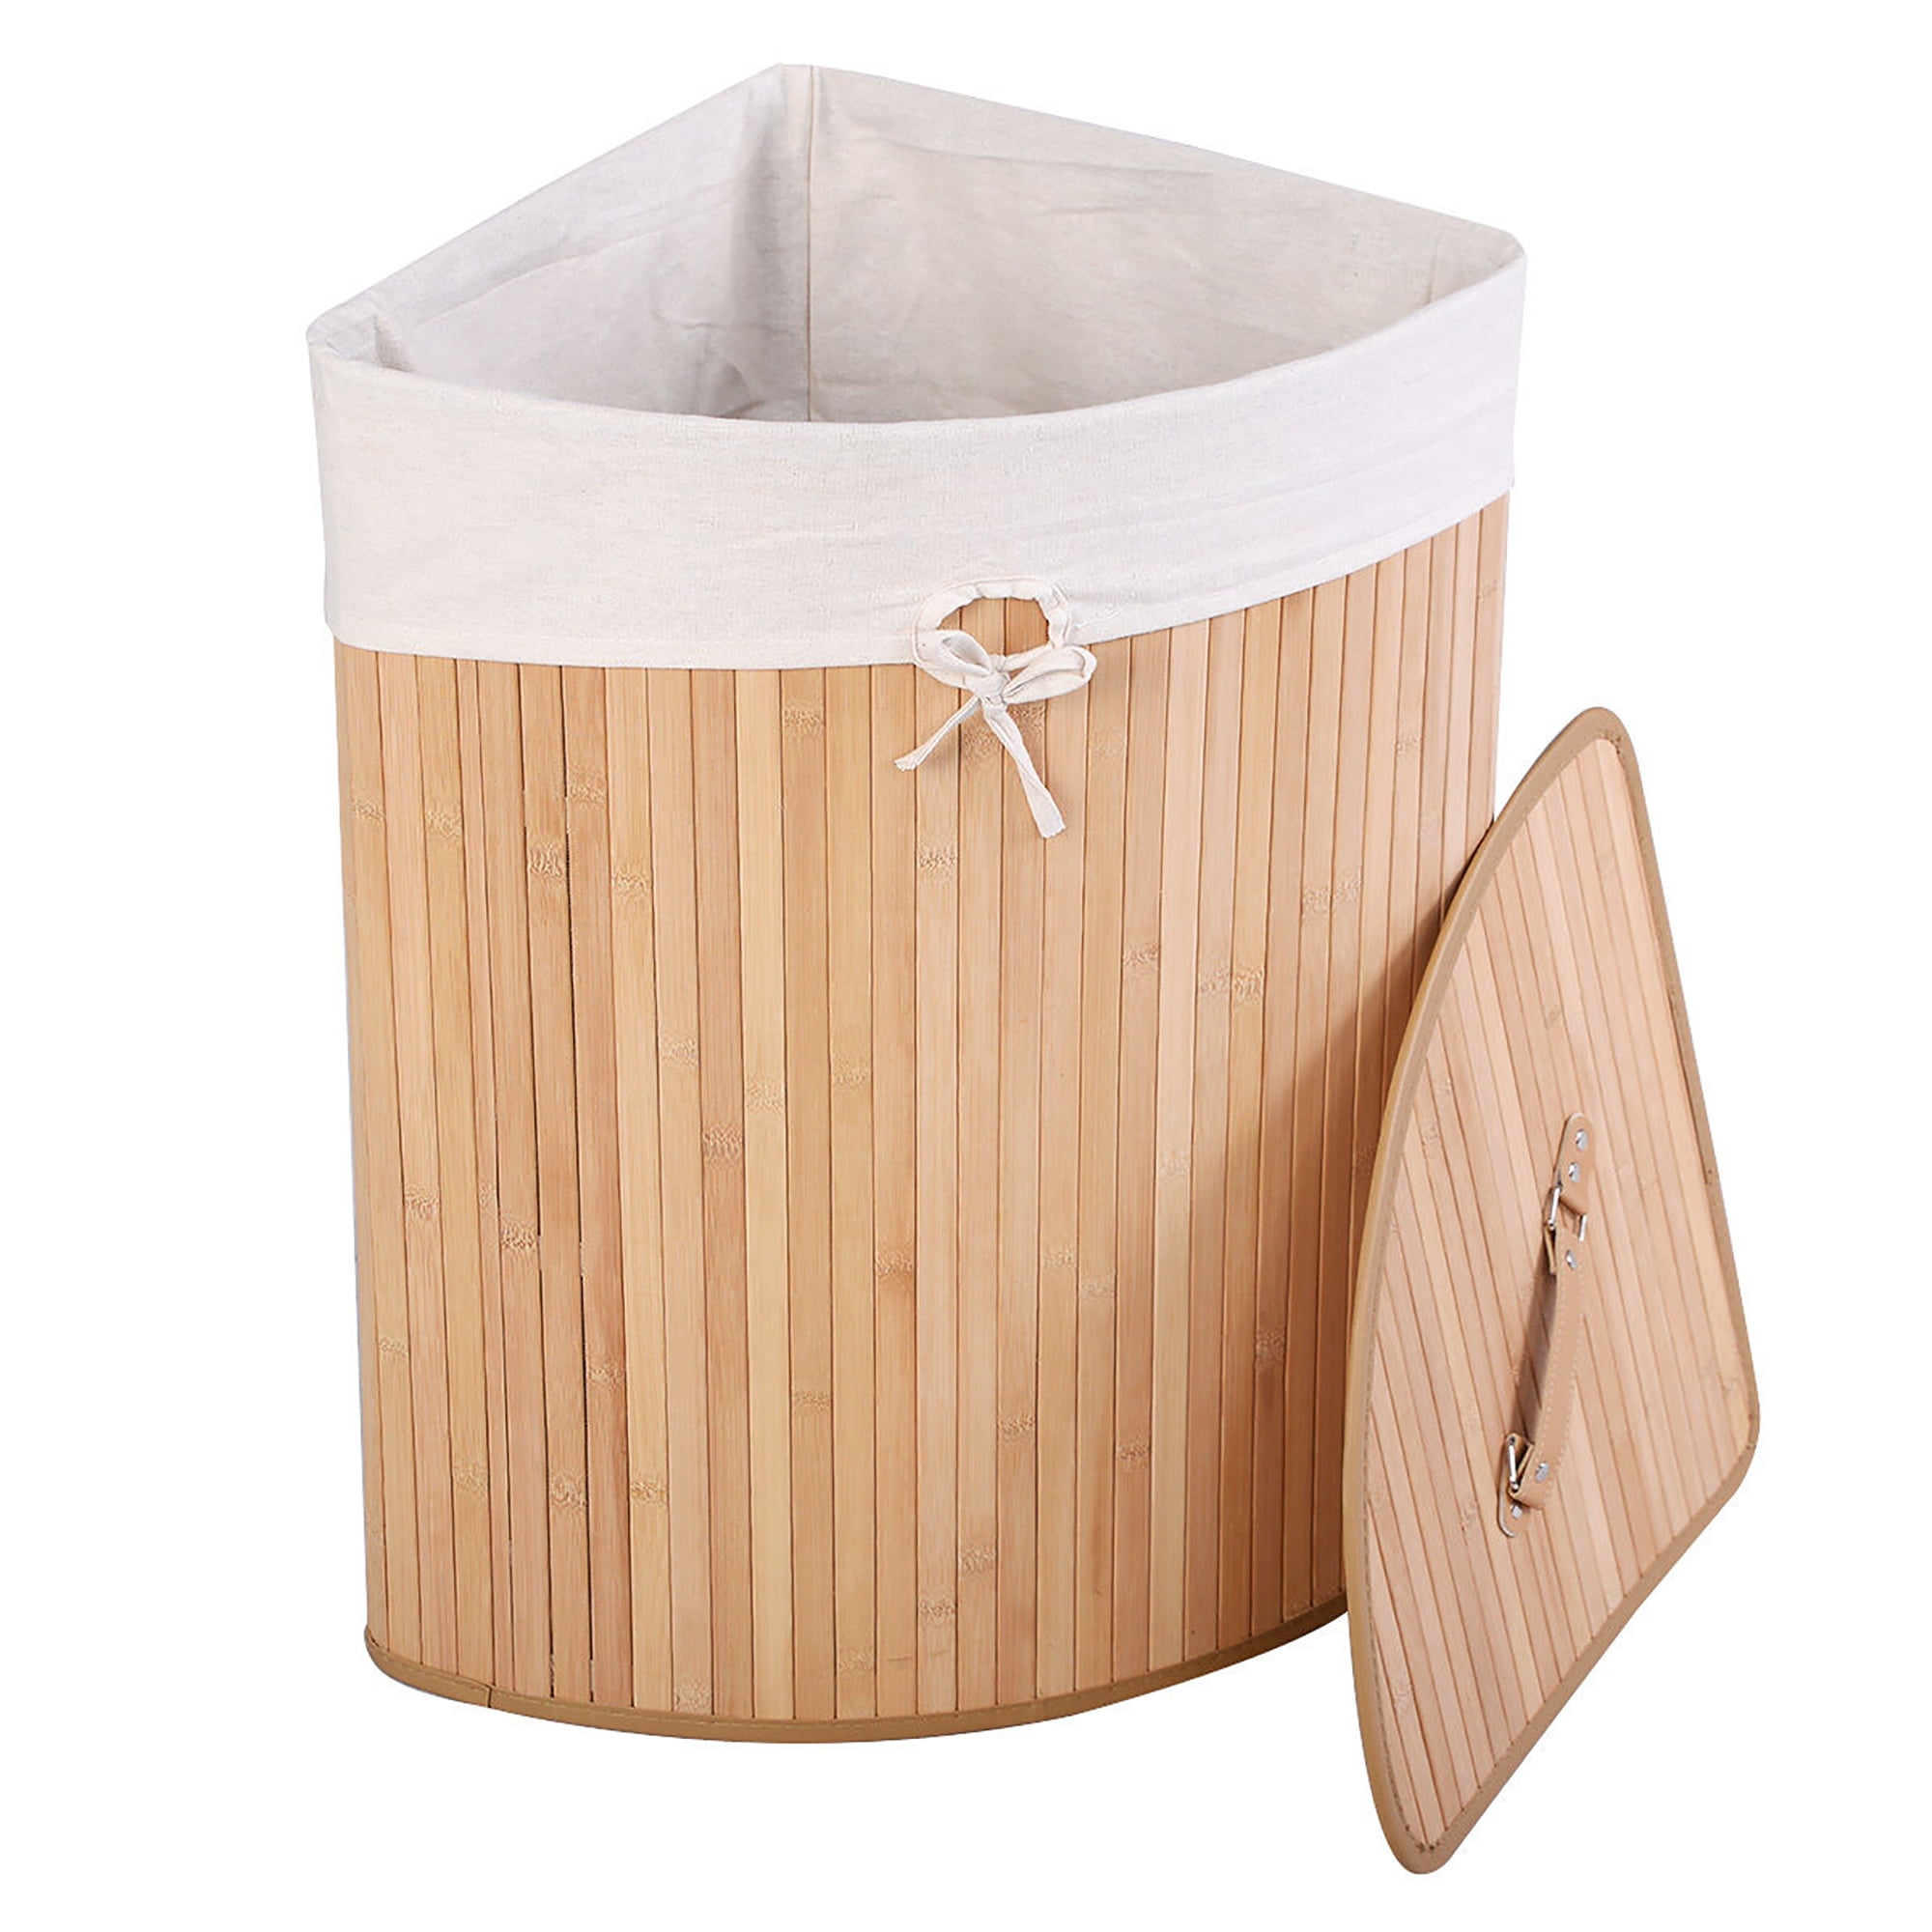 corner hamper storage cane organizer natural rattan wicker laundry basket